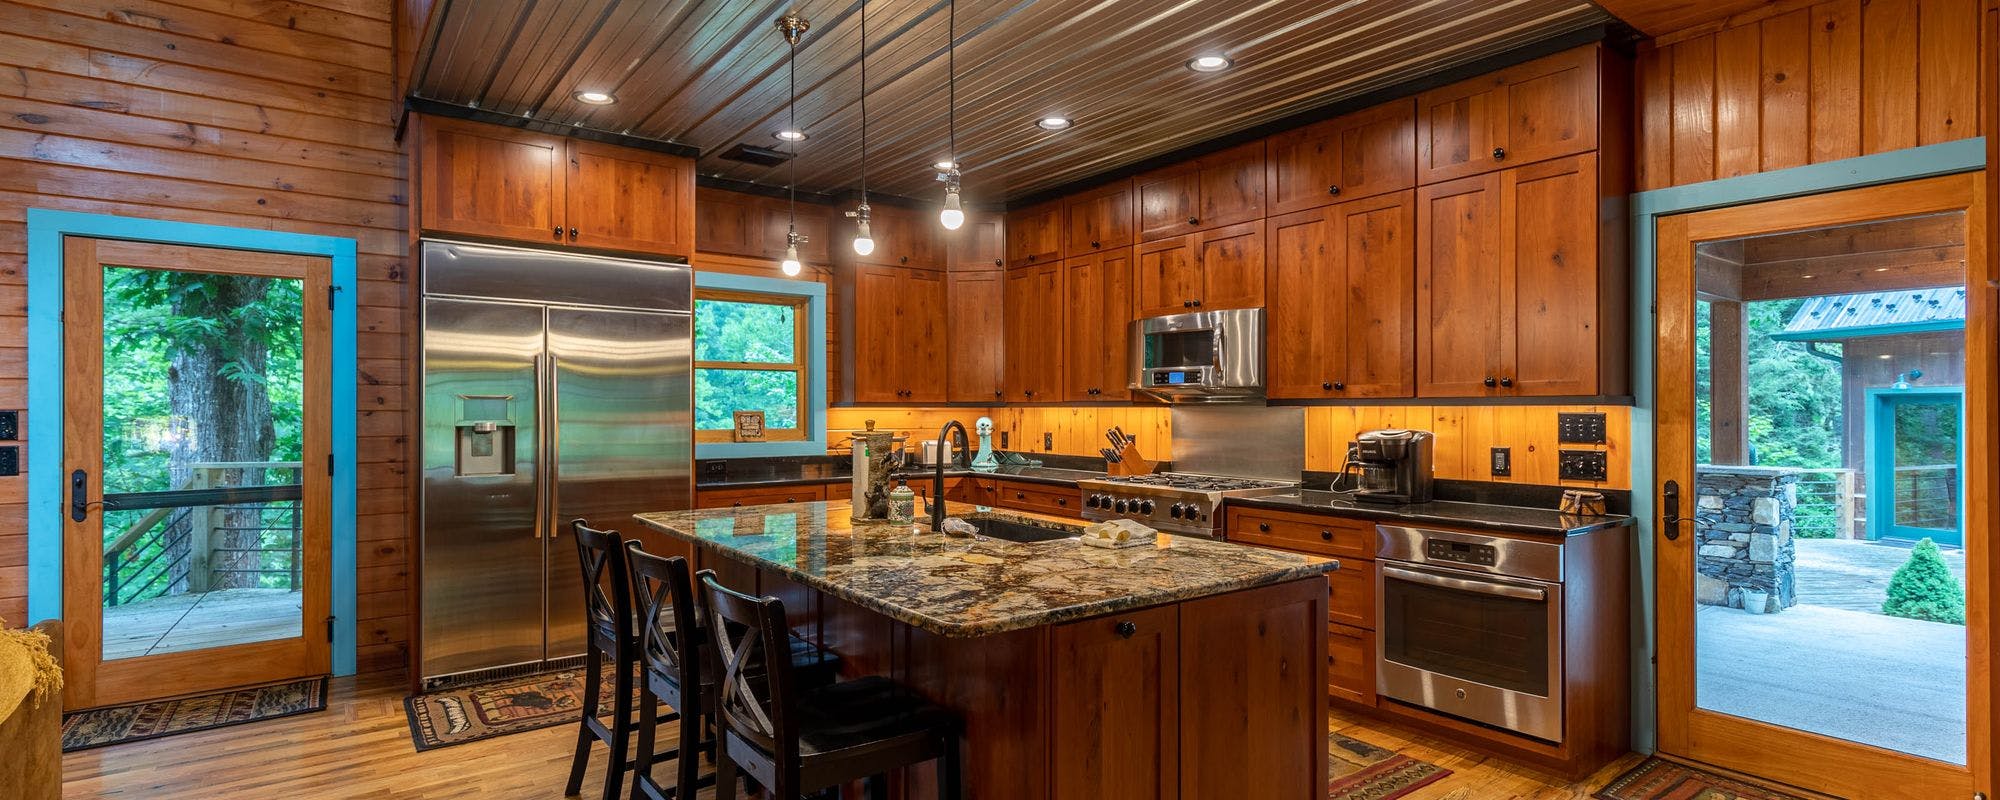 Luxury vacation rental kitchen in North Carolina mountains